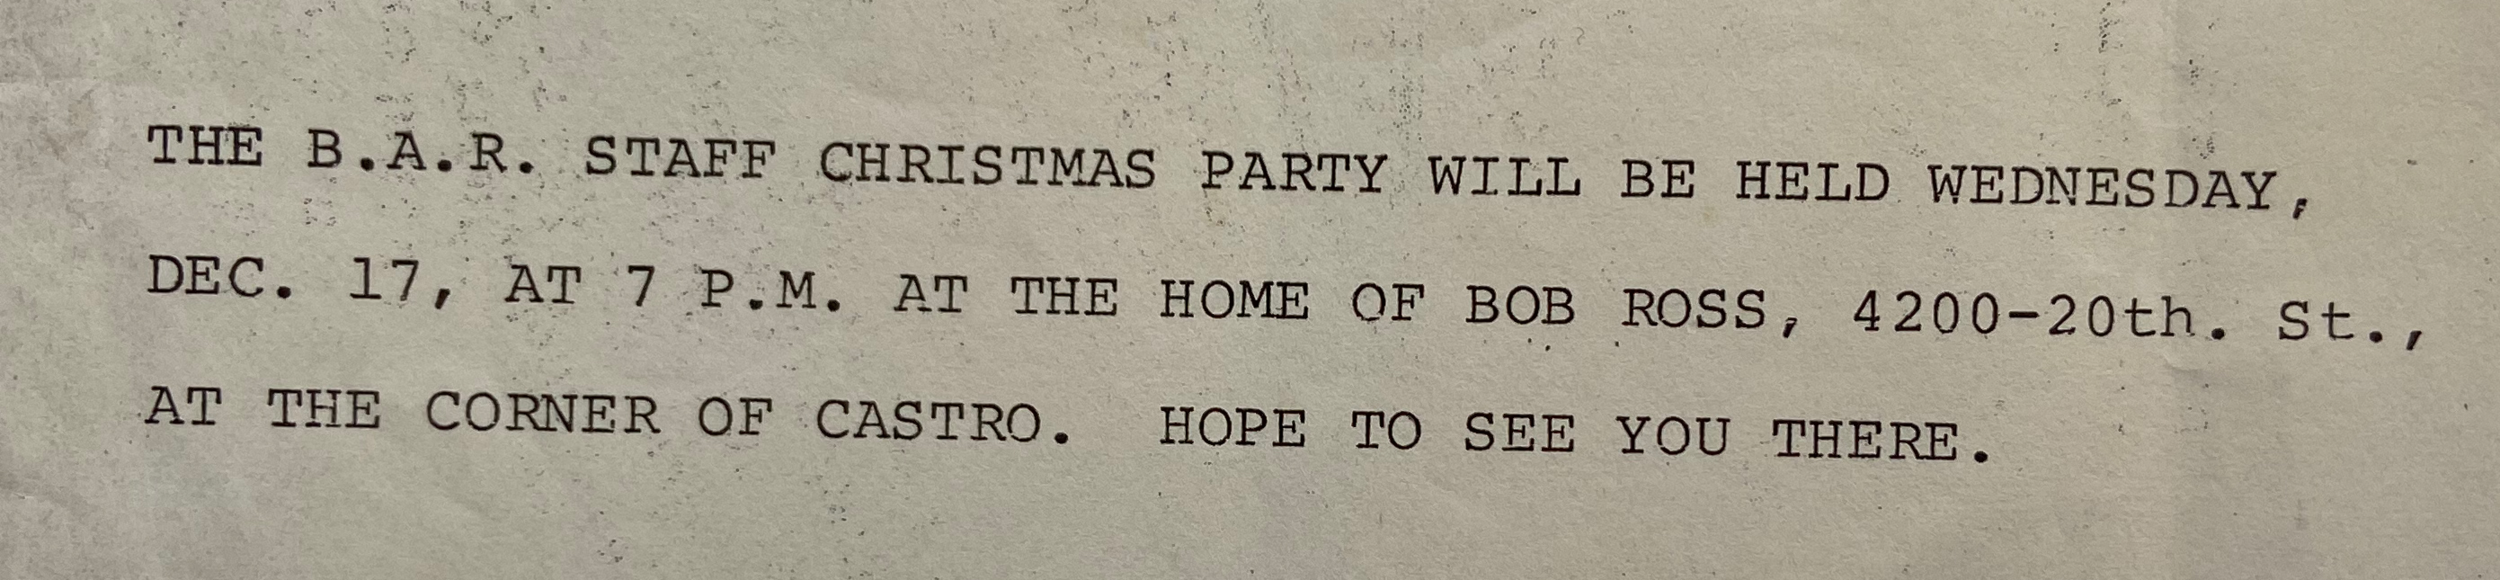  B.A.R. Staff Christmas Party invitation, December 17, circa 1970-1980; Ephemera Collection (Business-Bay Area Reporter), GLBT Historical Society. 